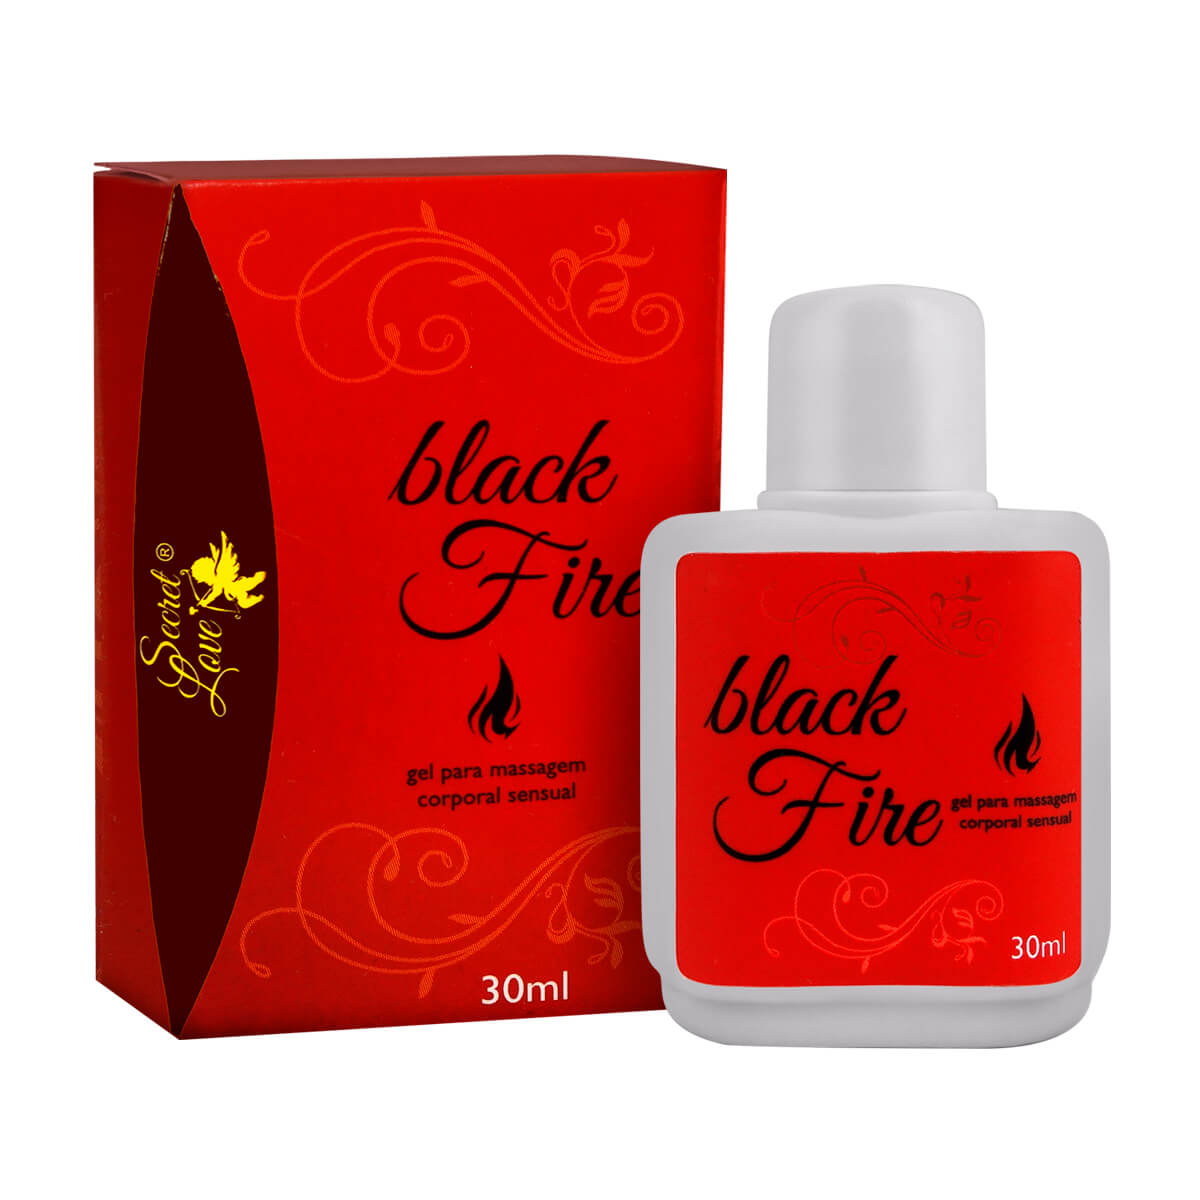 Black Hot Gel para Massagem Corporal Sensual 30ml Secret Love